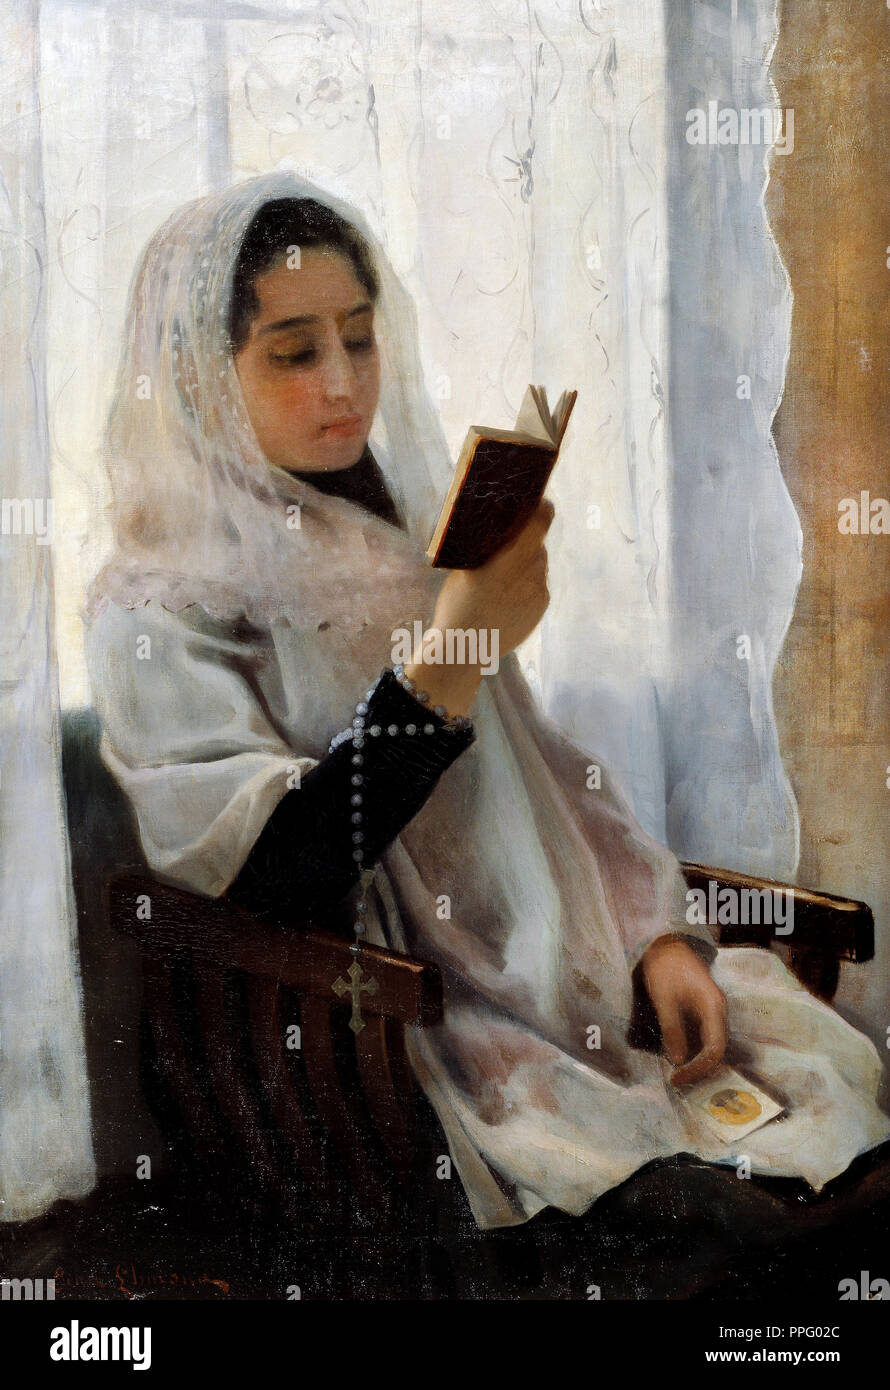 Joan Llimona - Lesung 1891 Öl auf Leinwand. Museu Nacional d'Art de Catalunya, Barcelona, Spanien. Stockfoto